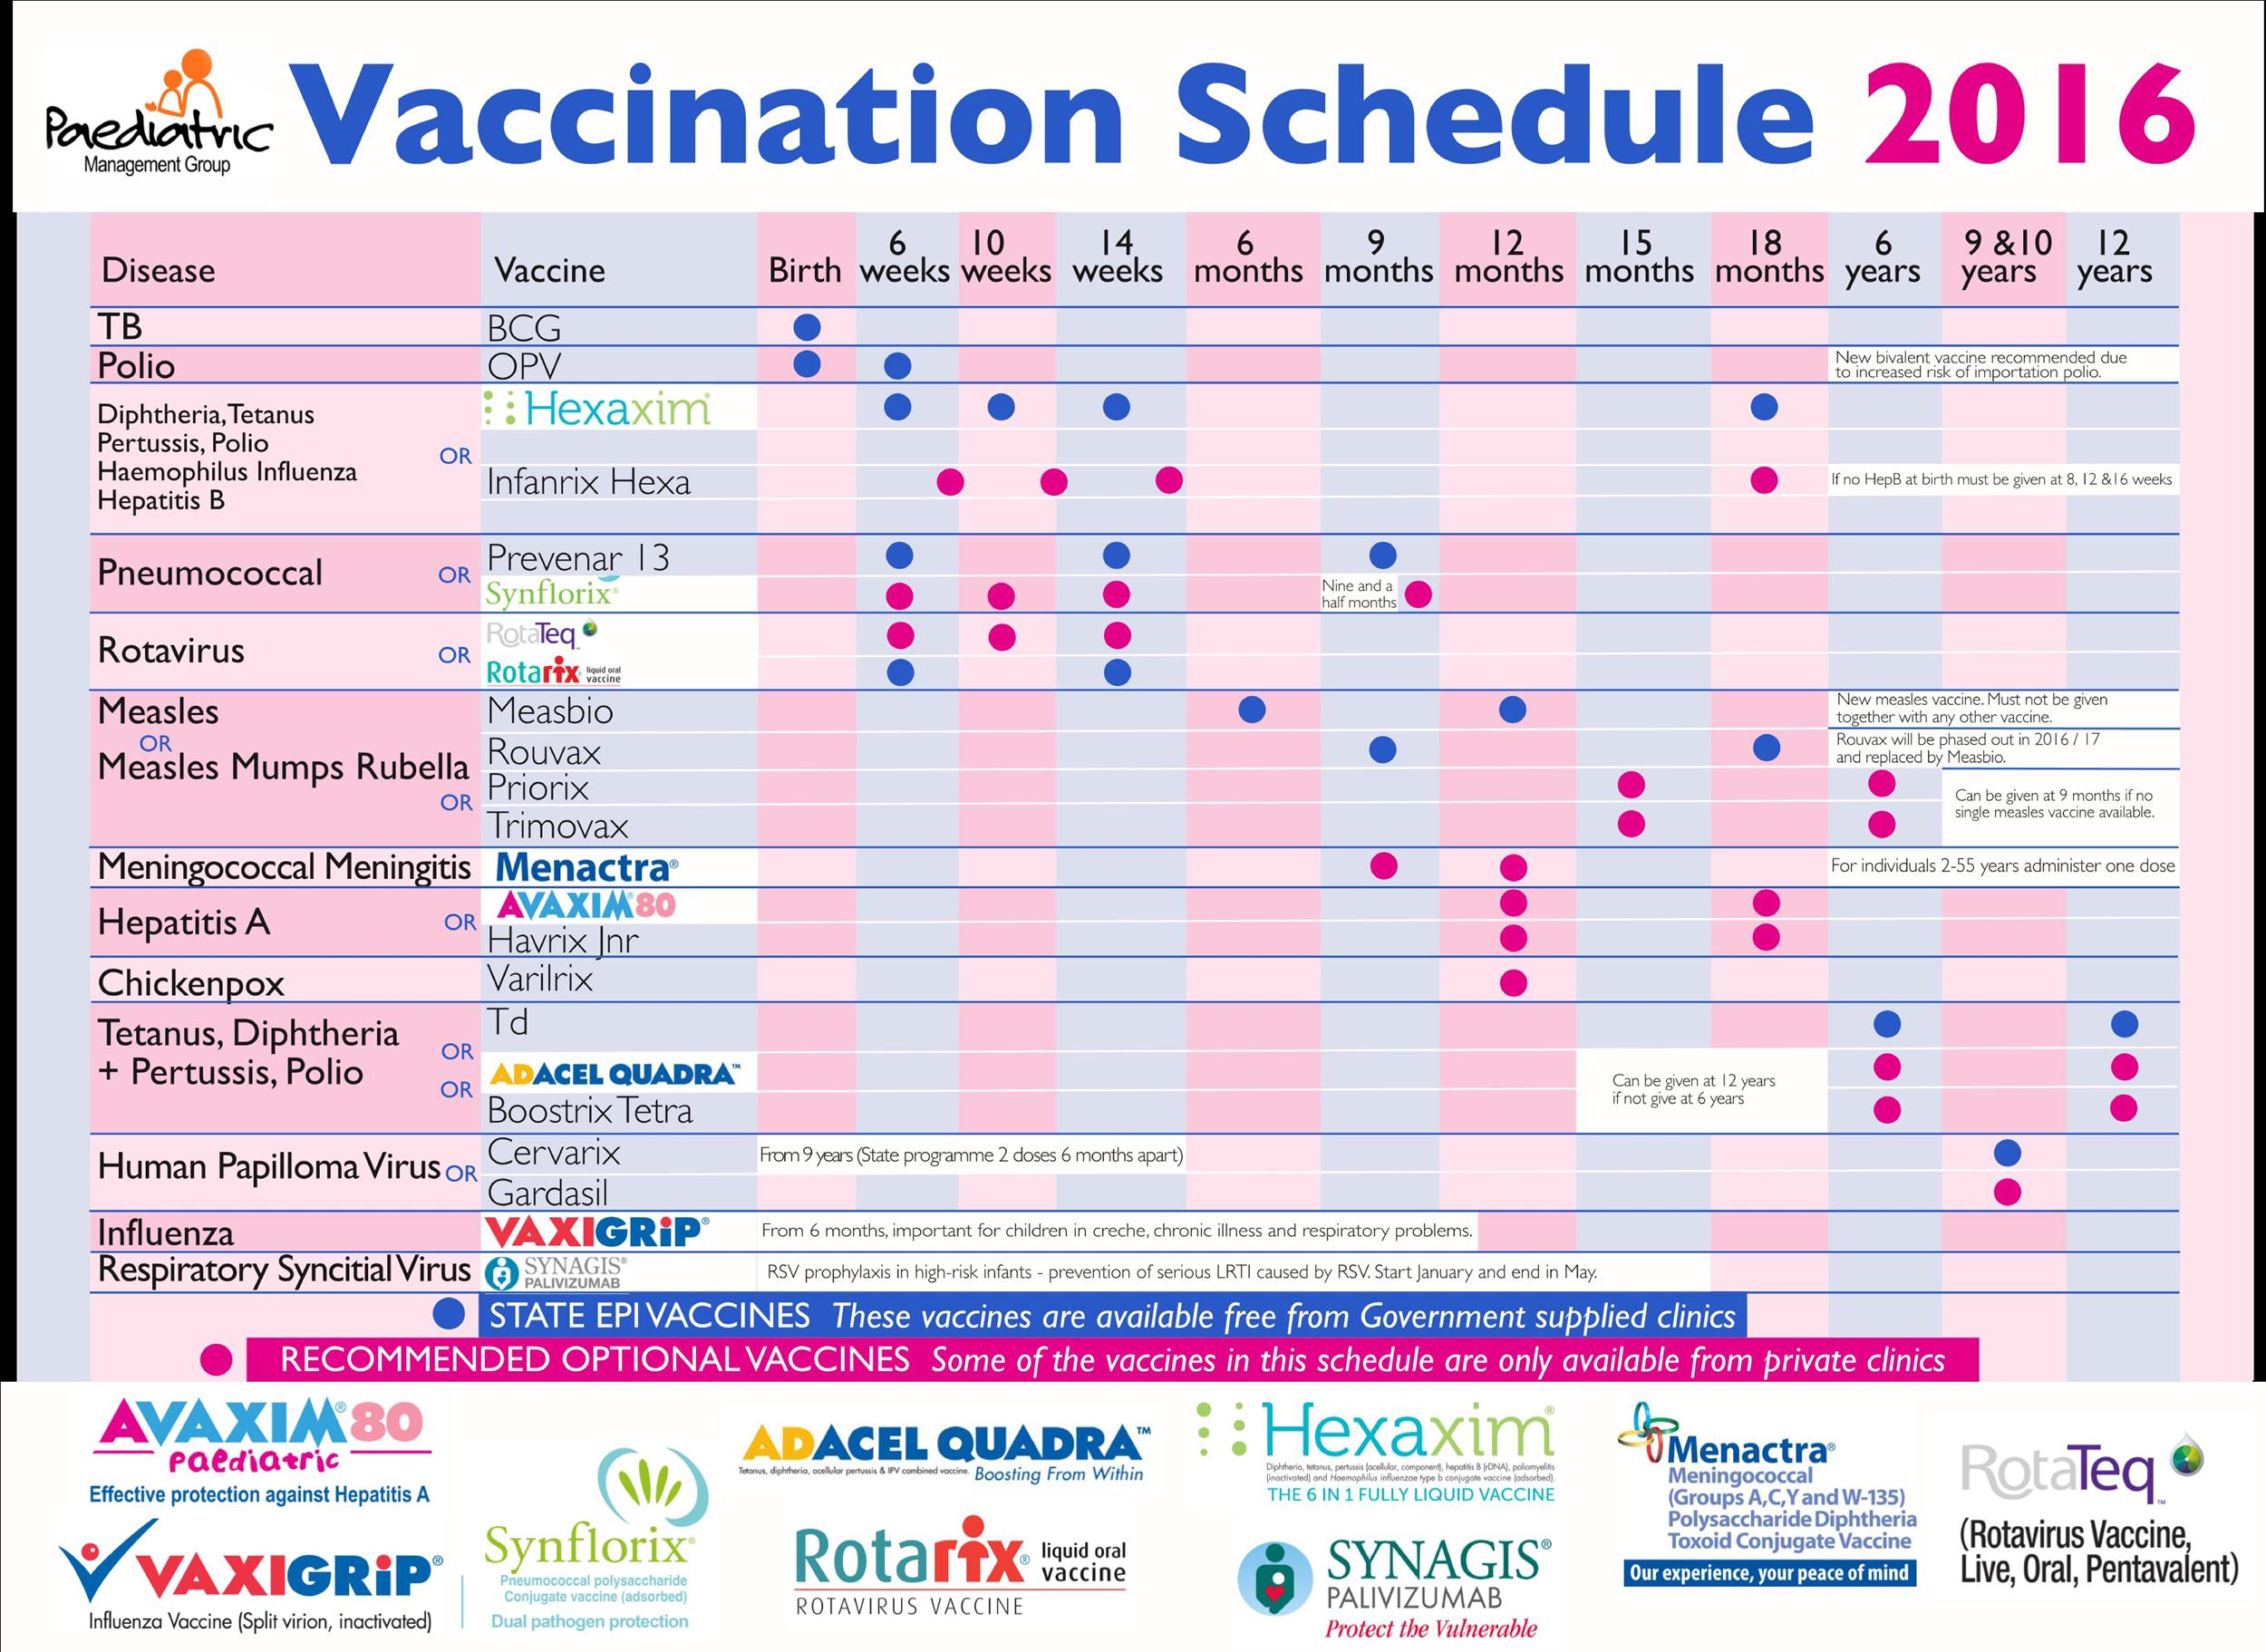 38 Useful Immunization & Vaccination Schedules [PDF] ᐅ TemplateLab